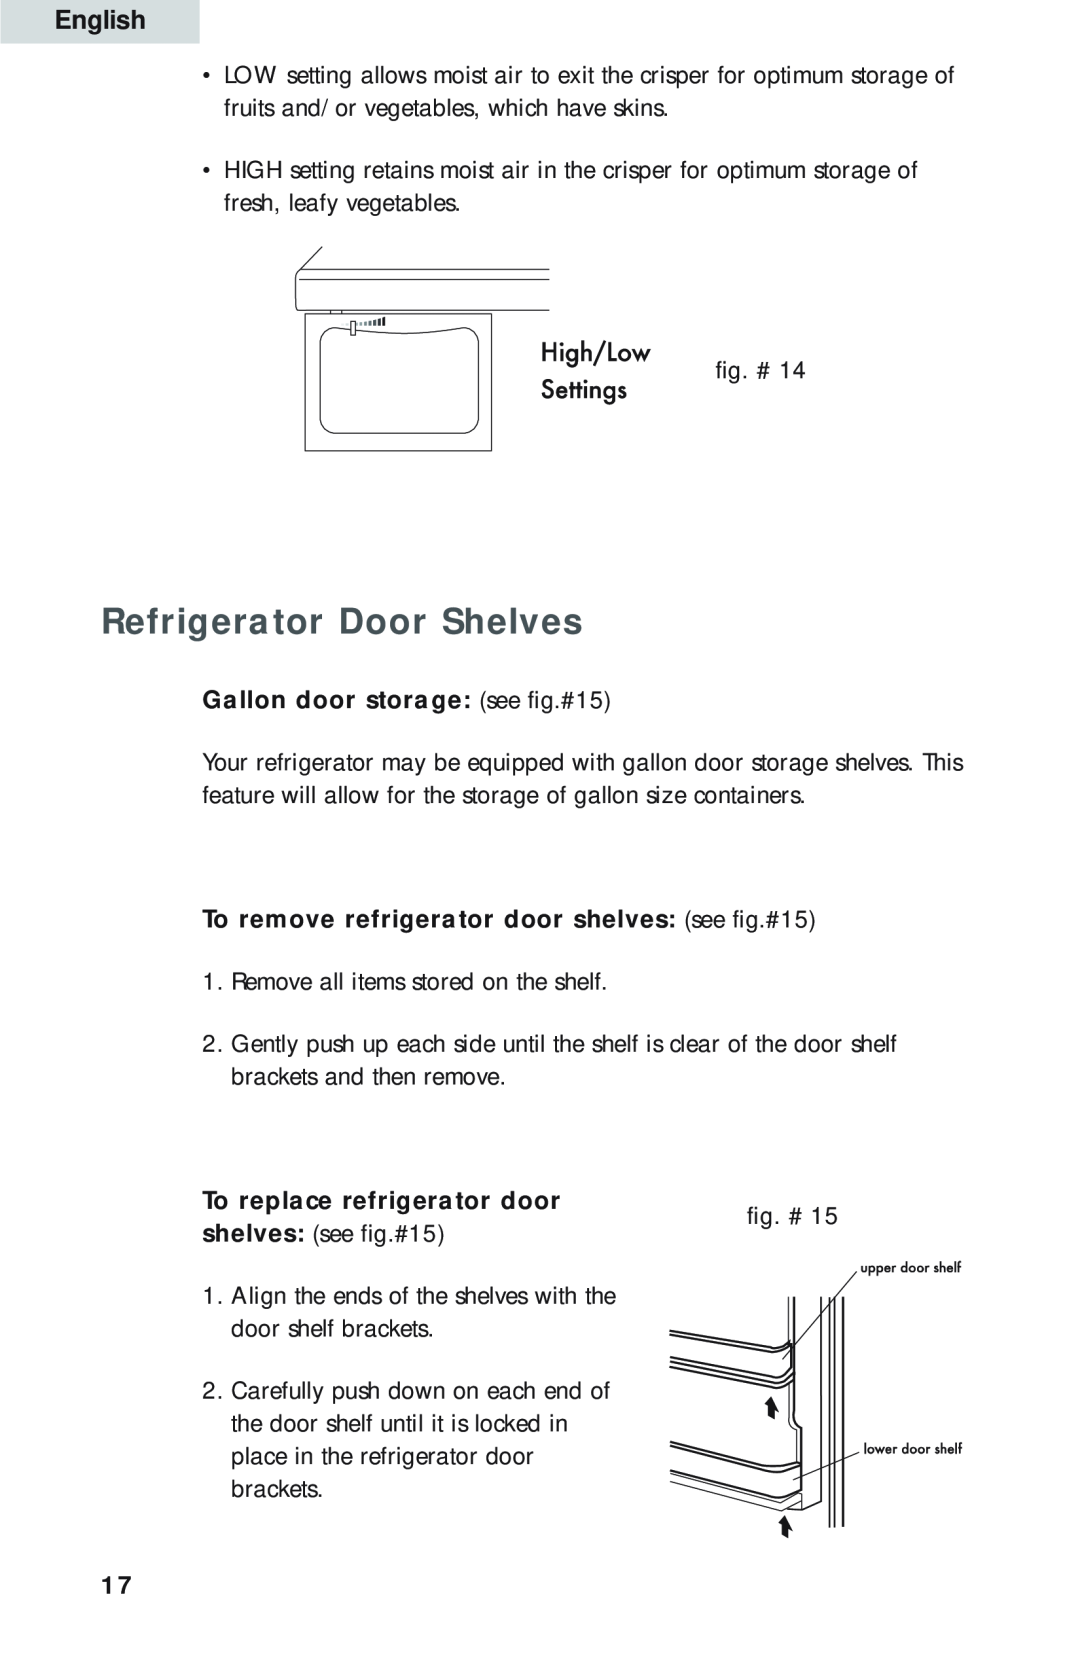 Haier HBQ18 Refrigerator Door Shelves, Gallon door storage see fig.#15, To remove refrigerator door shelves see fig.#15 